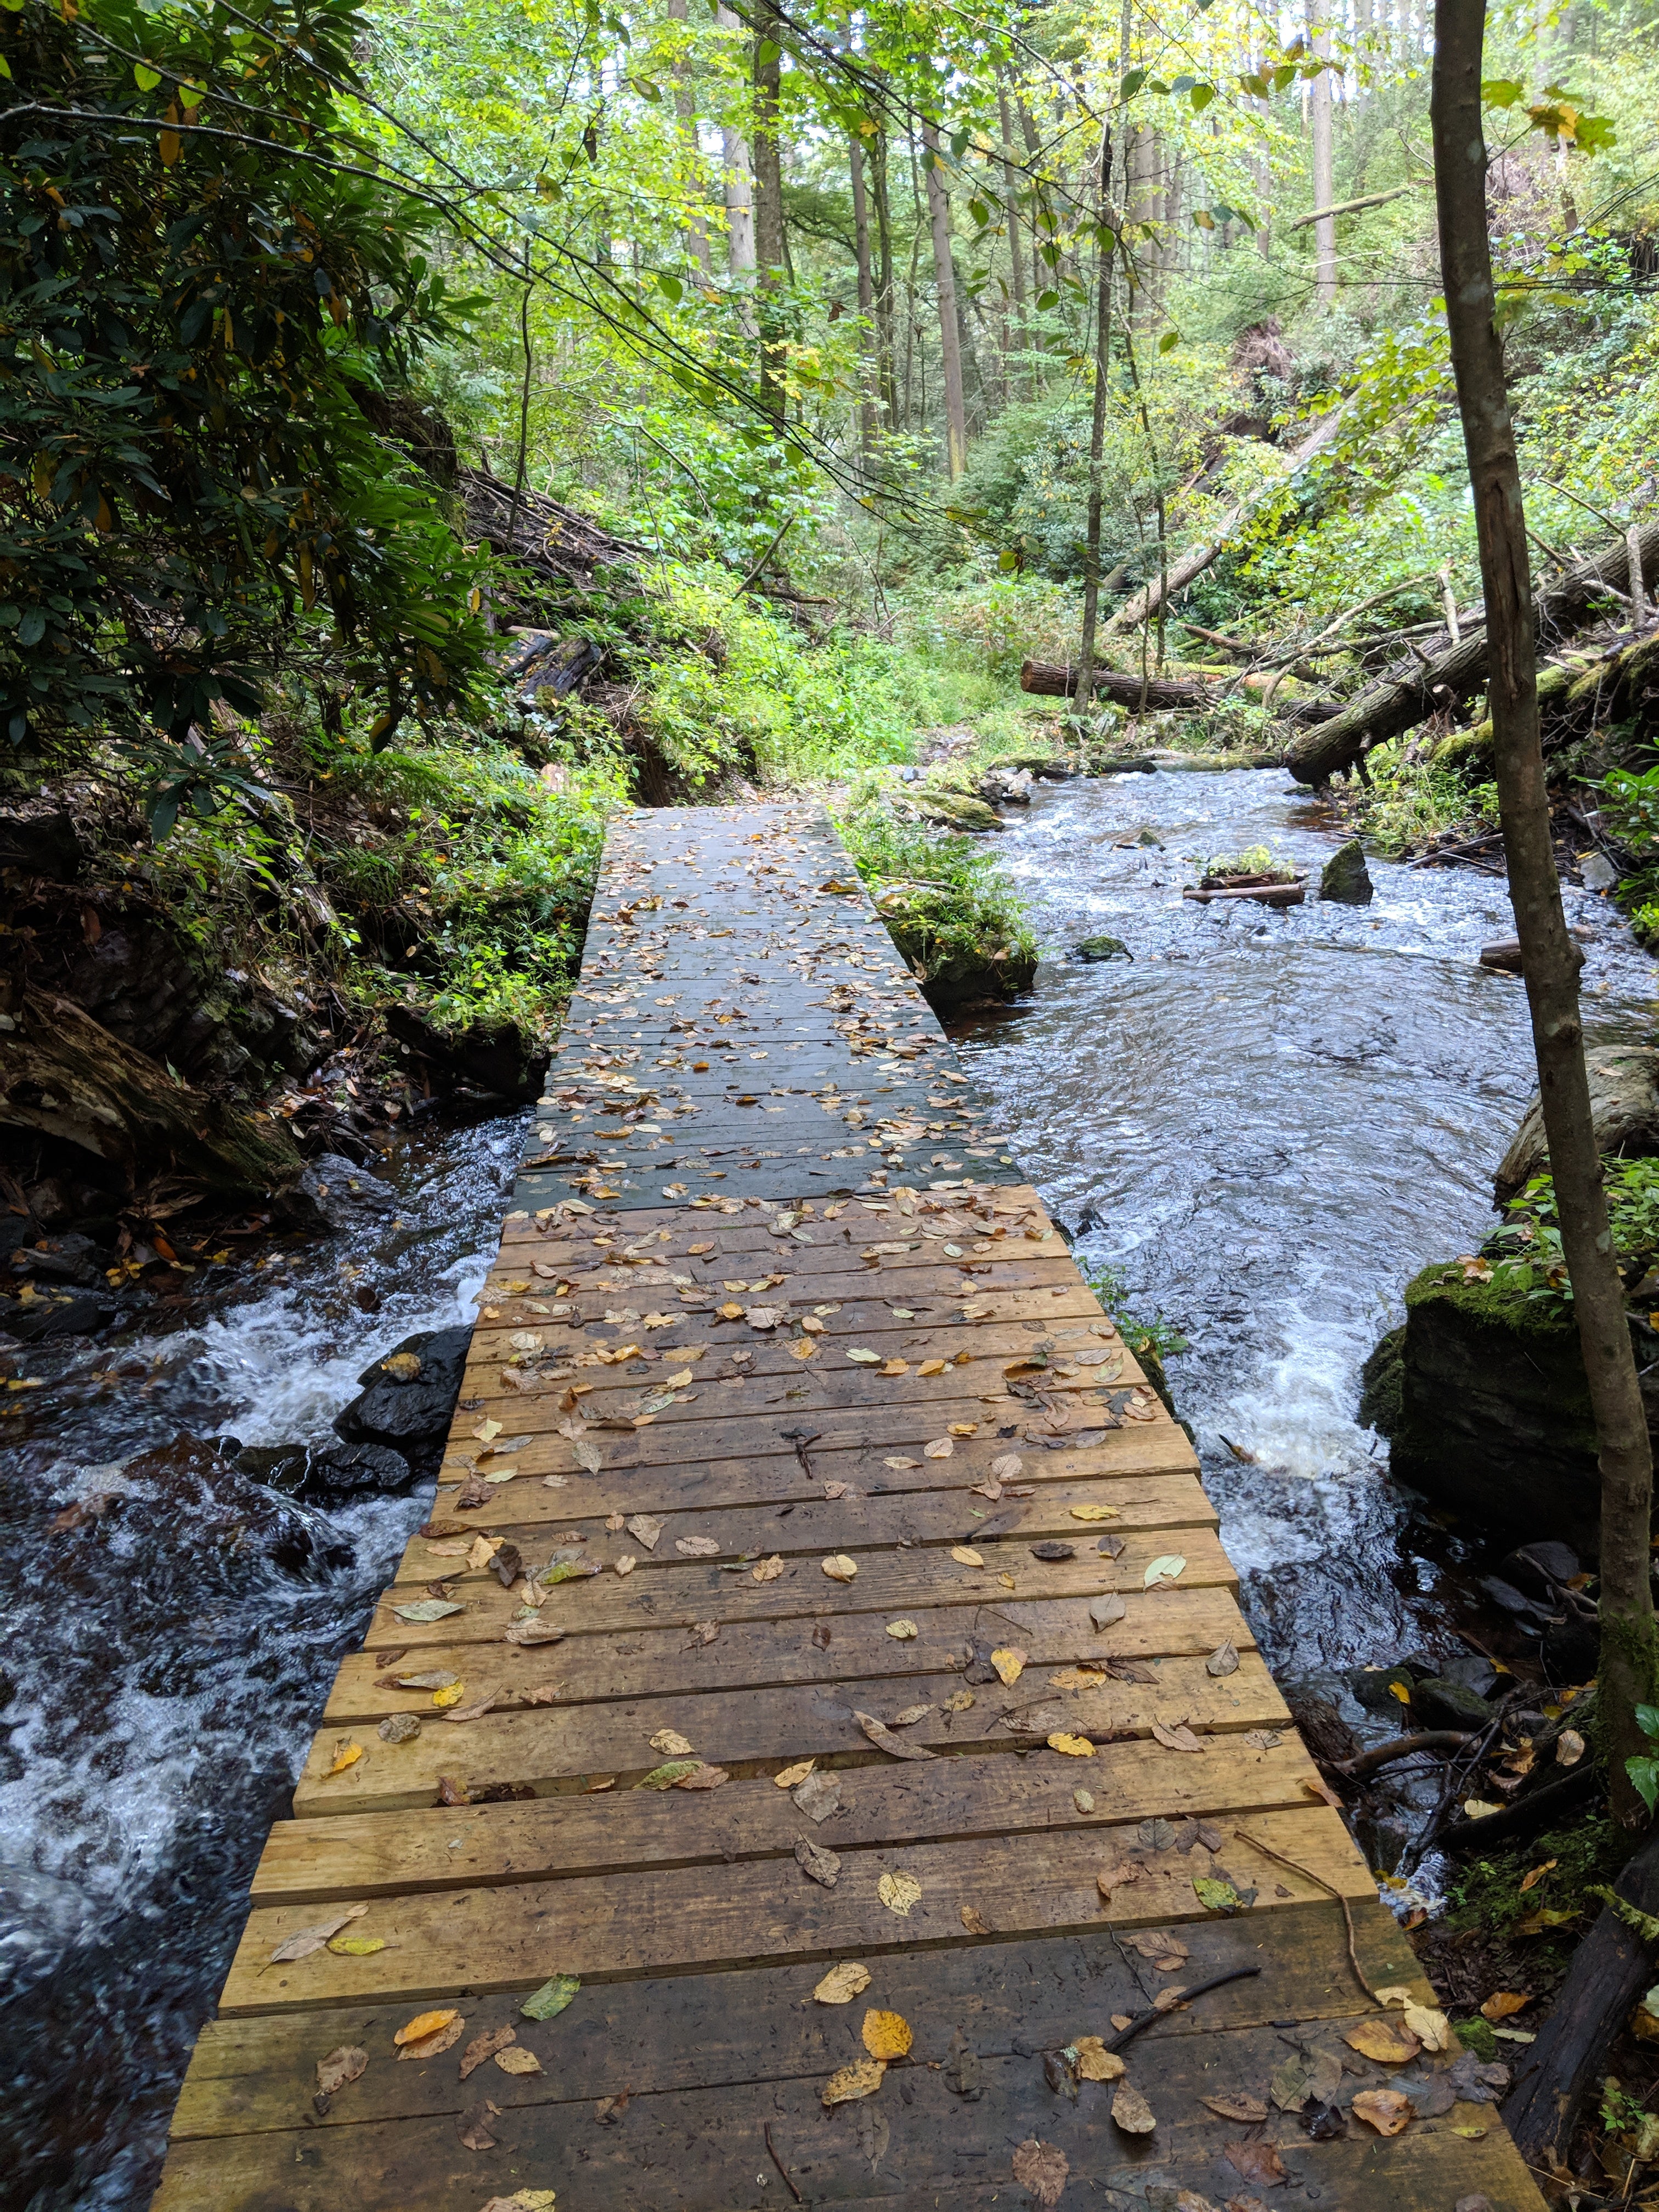 Hiking Tillman Ravine trail. The wood bridges are VERY slippery when wet.